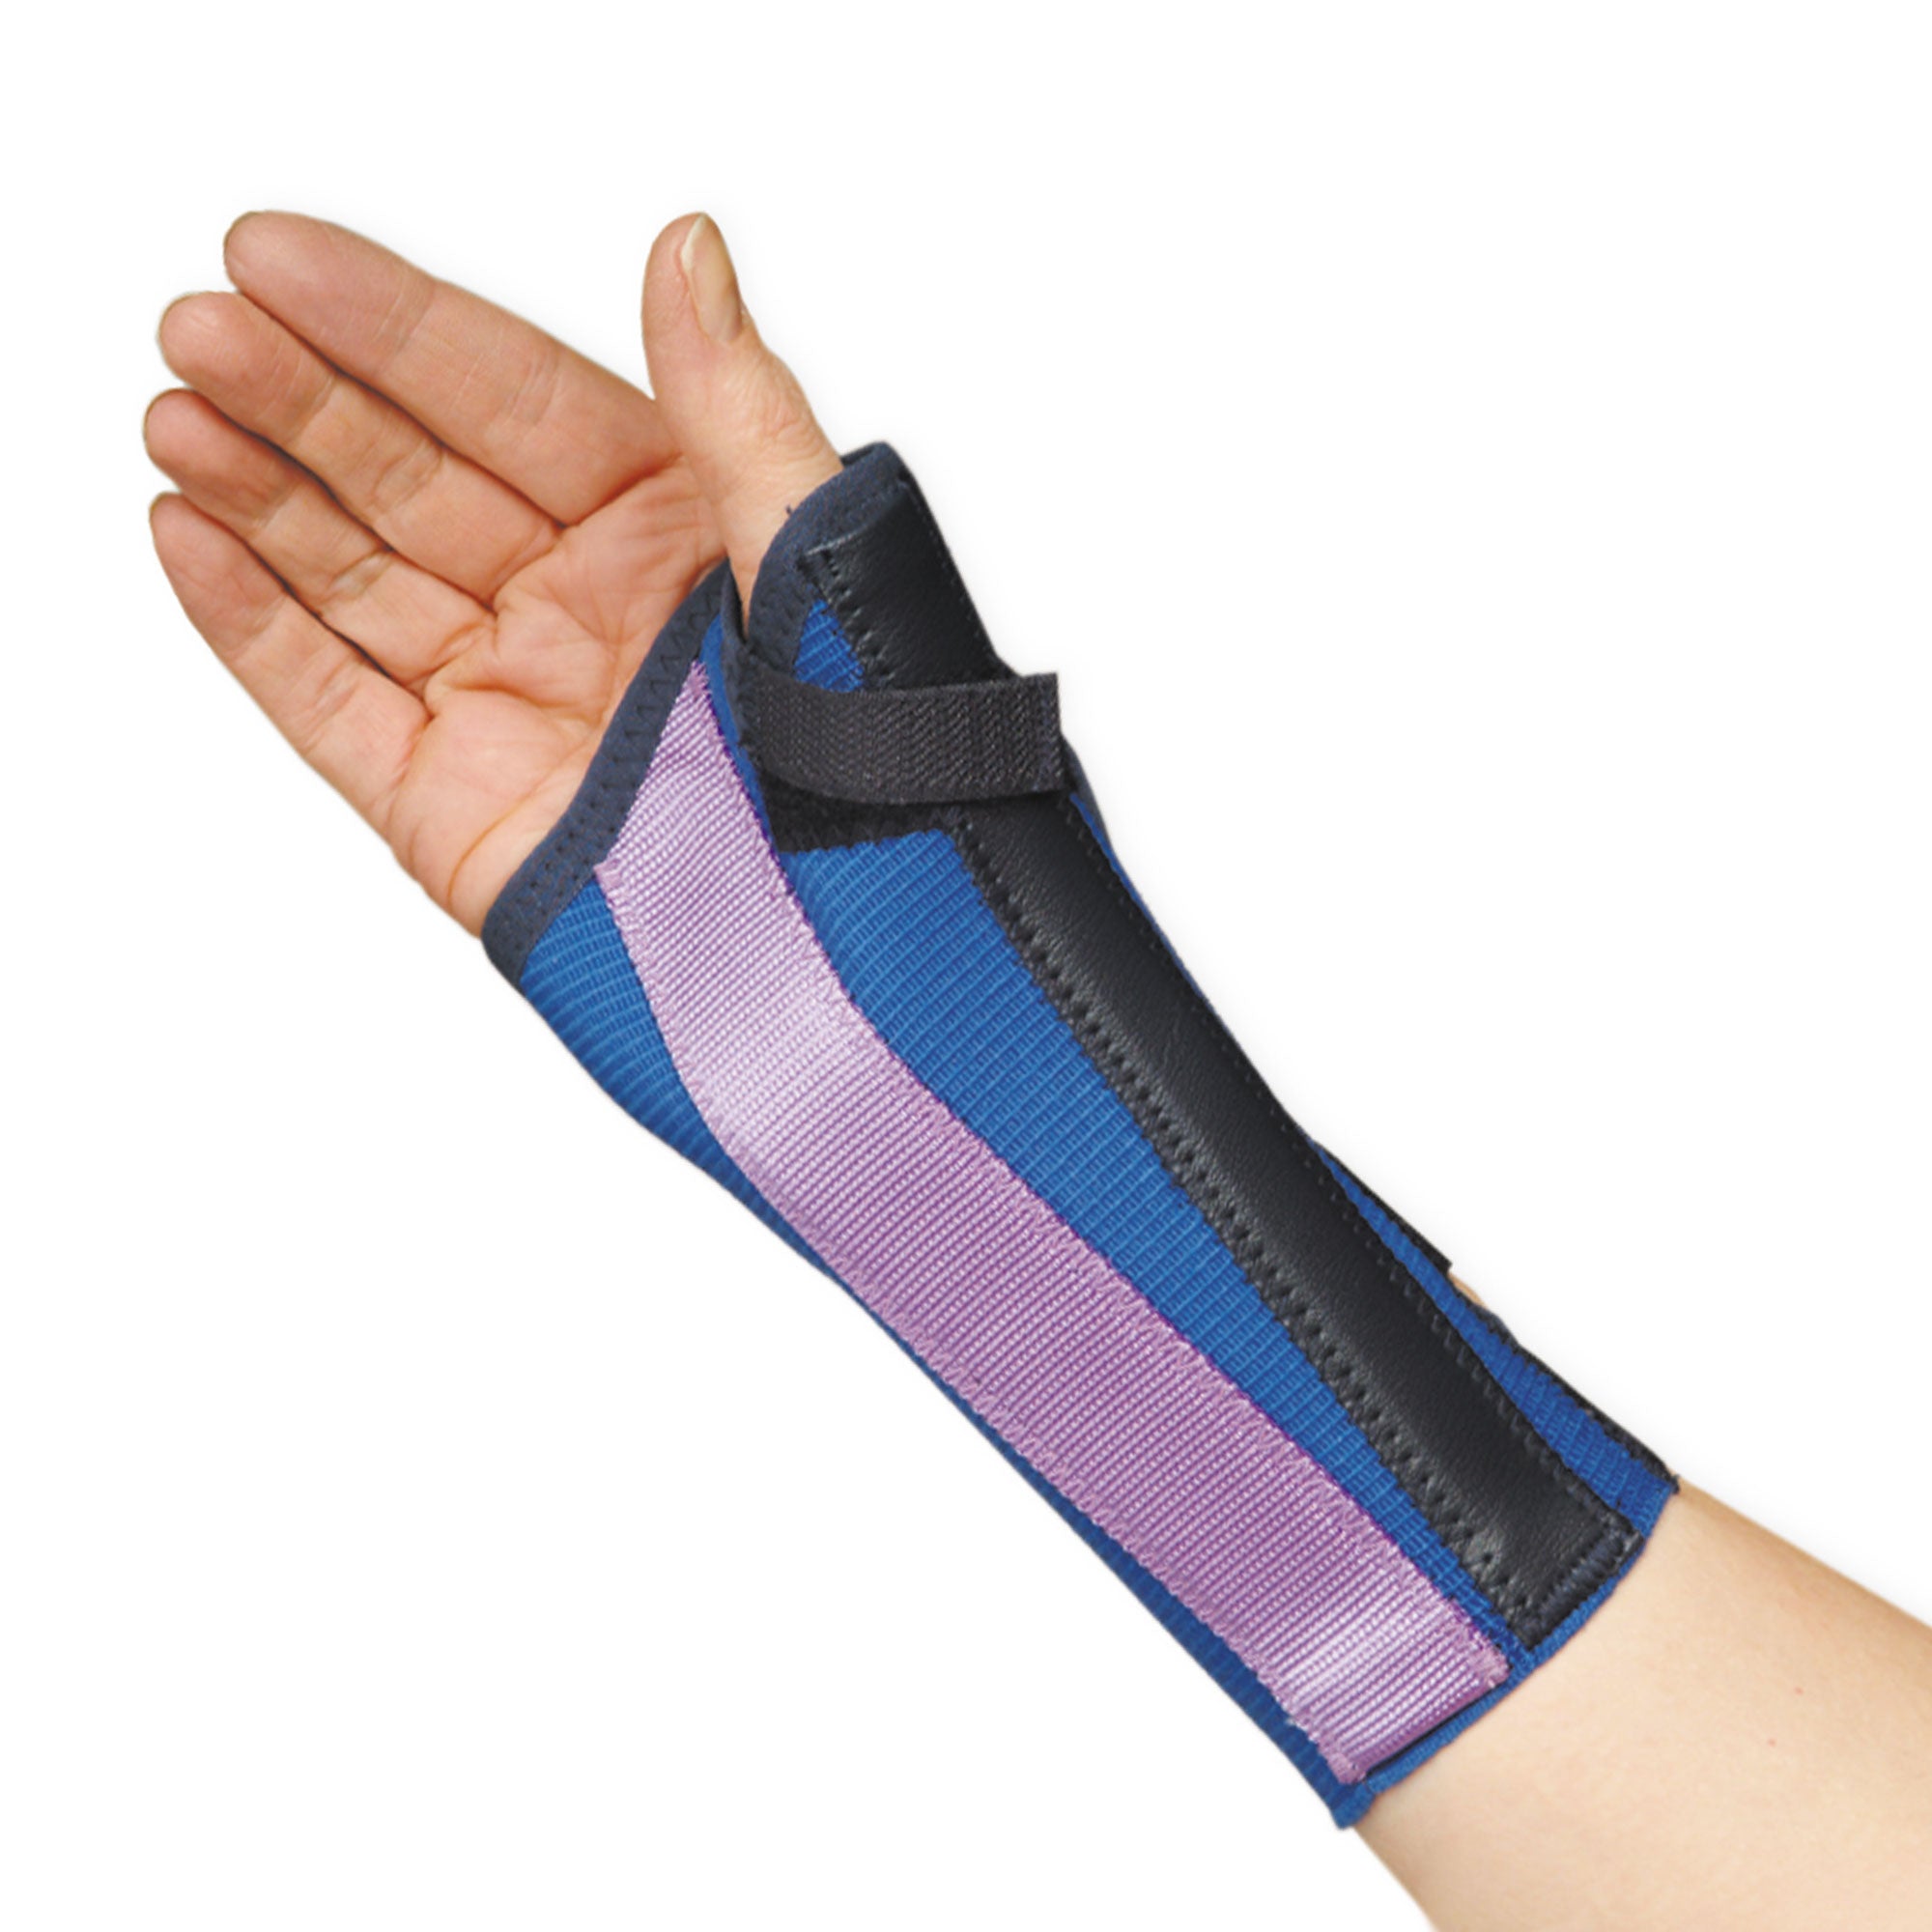 Paediatric Elastic Wrist/Thumb Brace